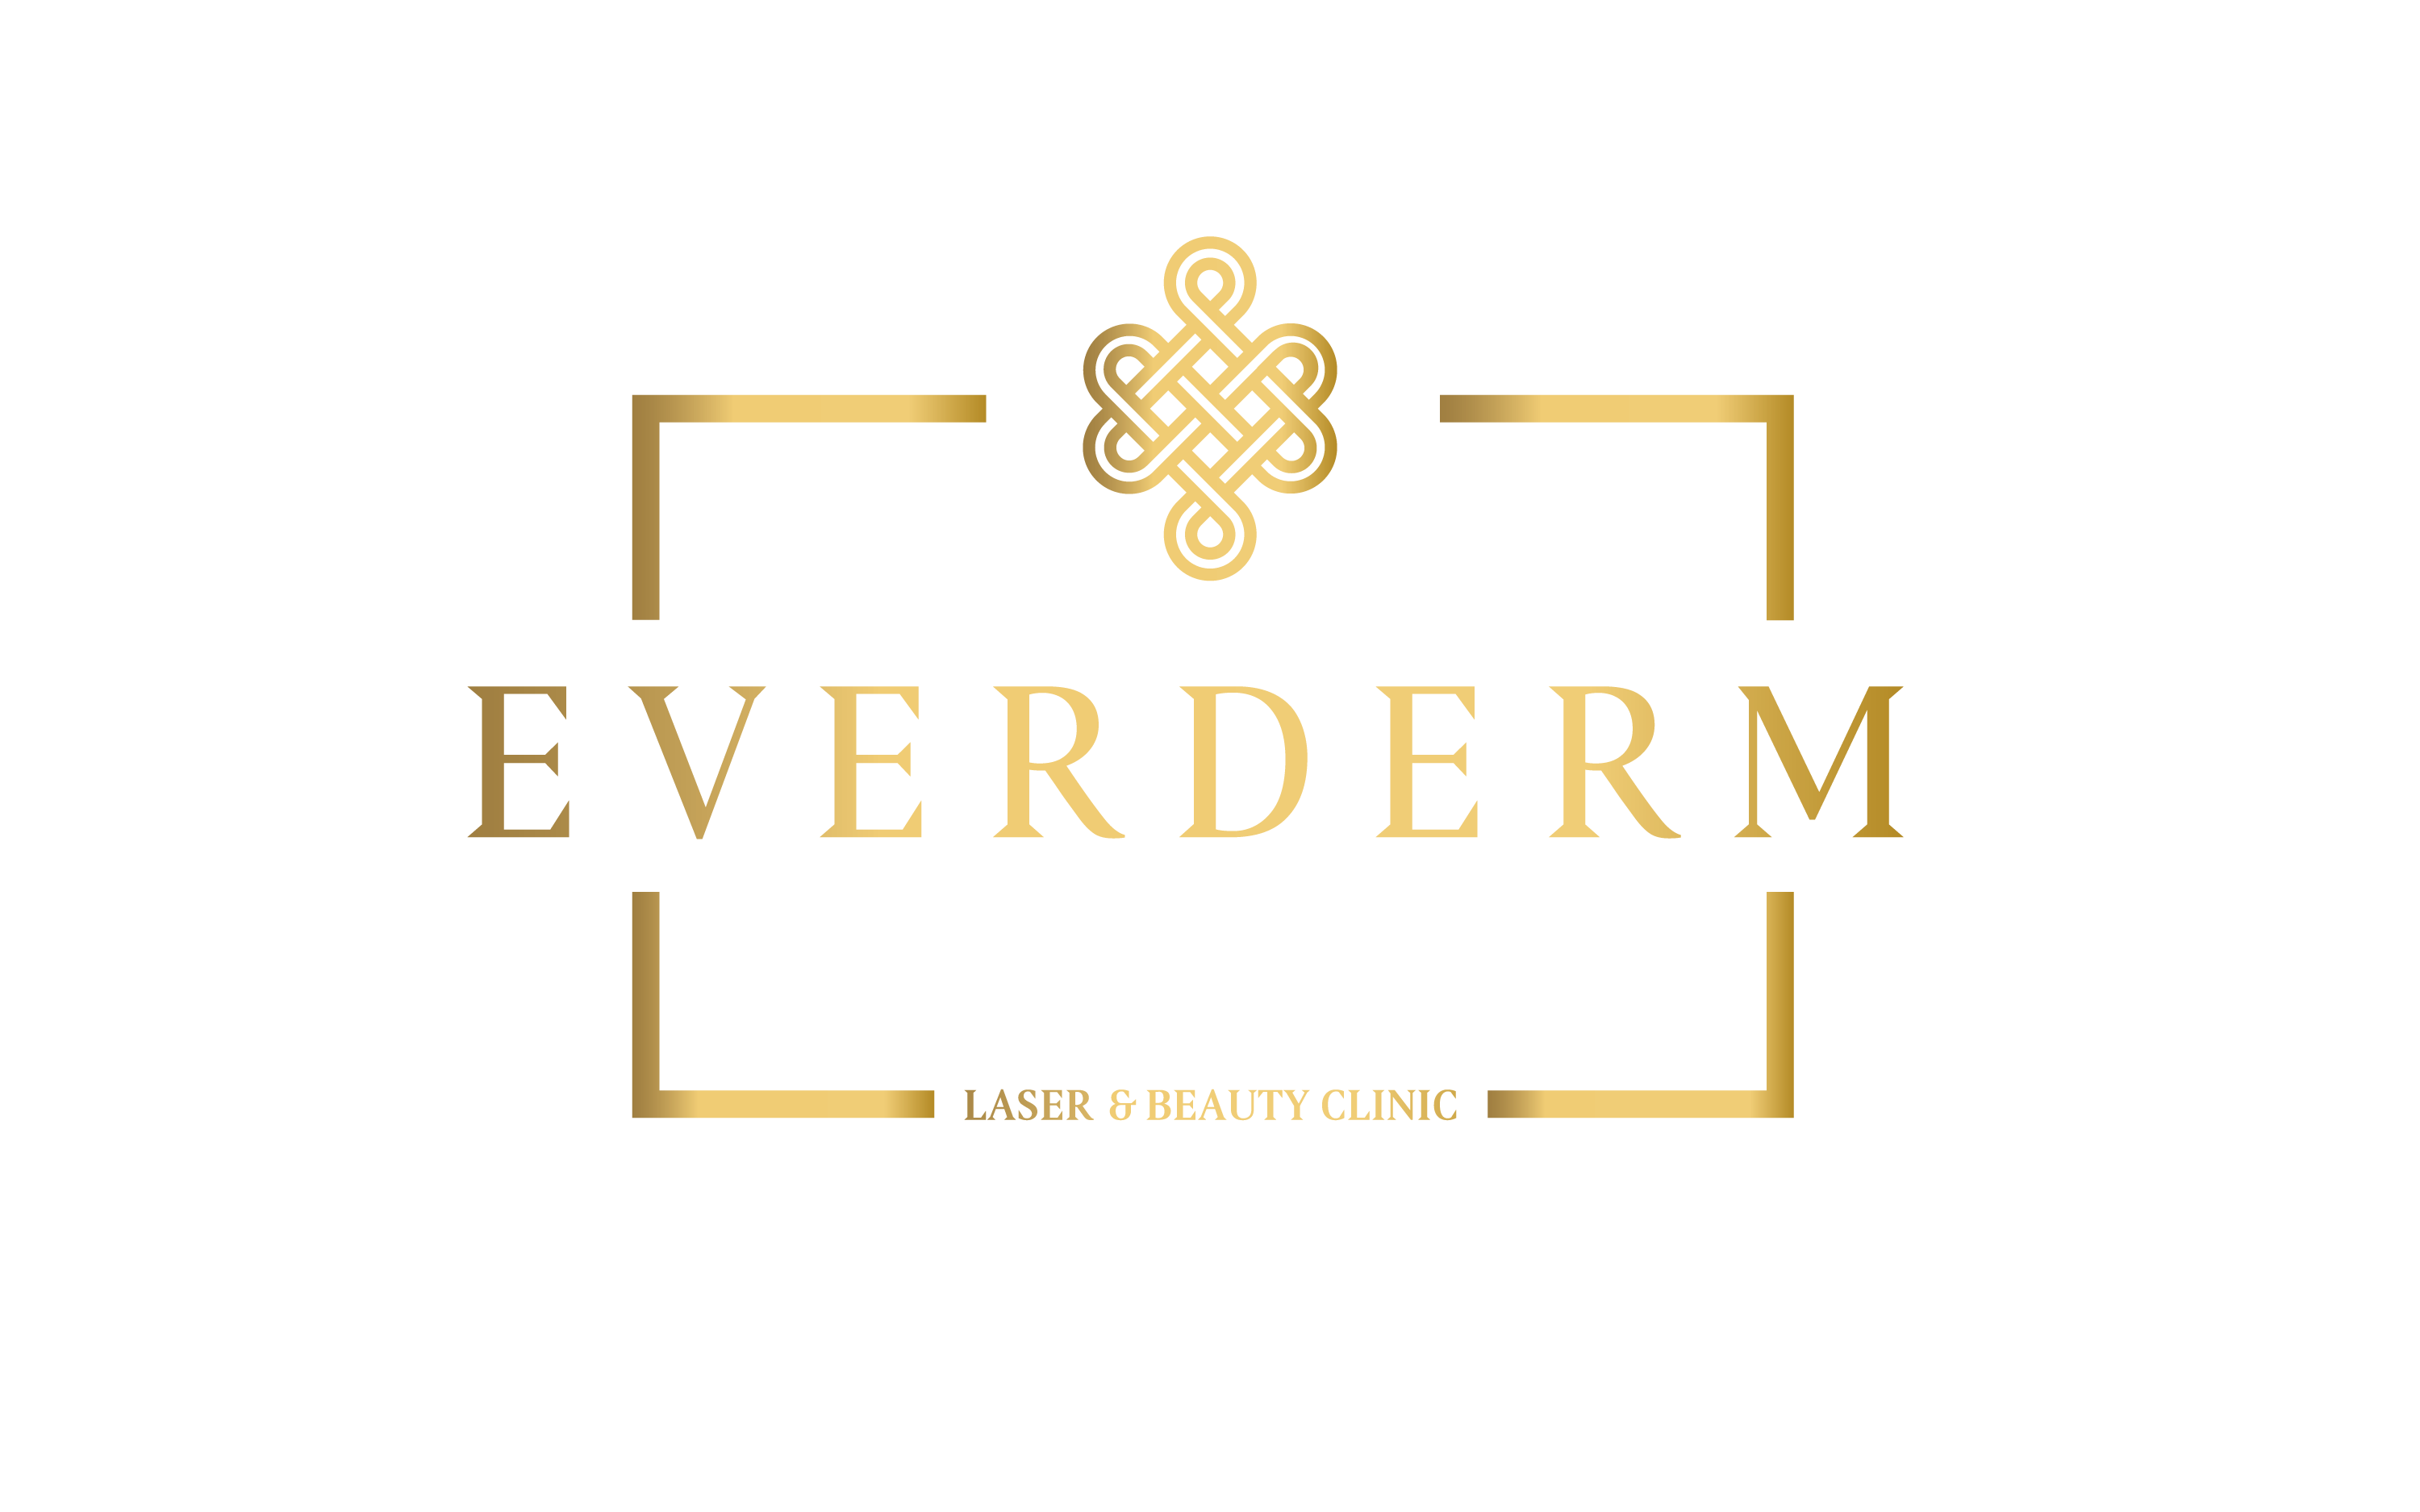 bagoma referencia: EverDerm Laser Center, Veszprém